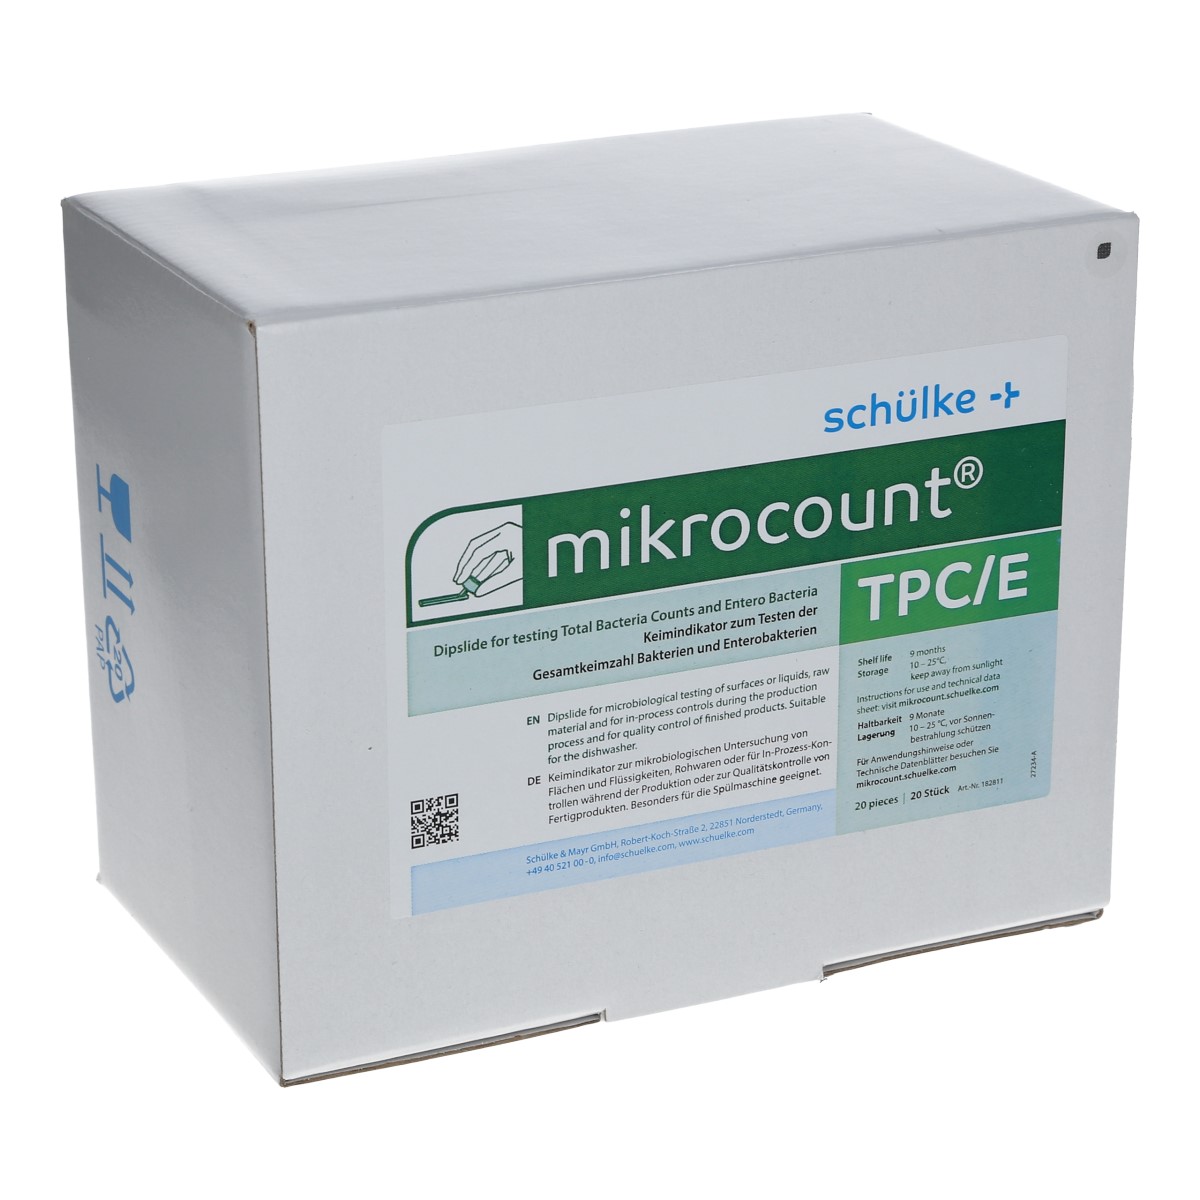 Schülke mikrocount tpc-E keimindikatoren eigenkontrolle bestellen